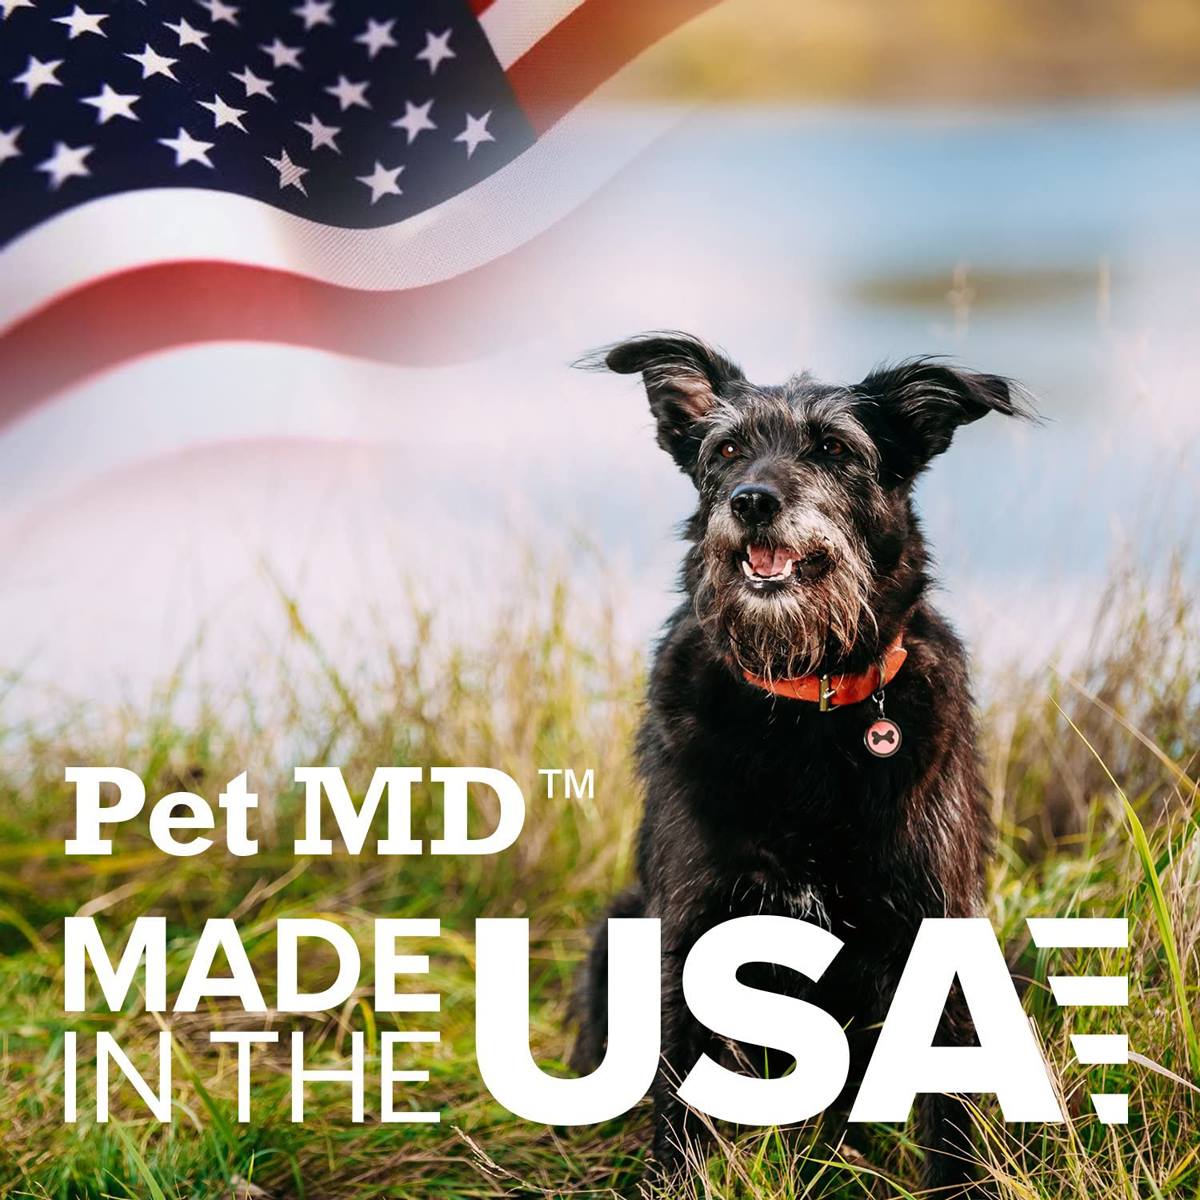 Pet MD(tm) Canine Tabs Plus Advanced Vitamin & Mineral Supplement